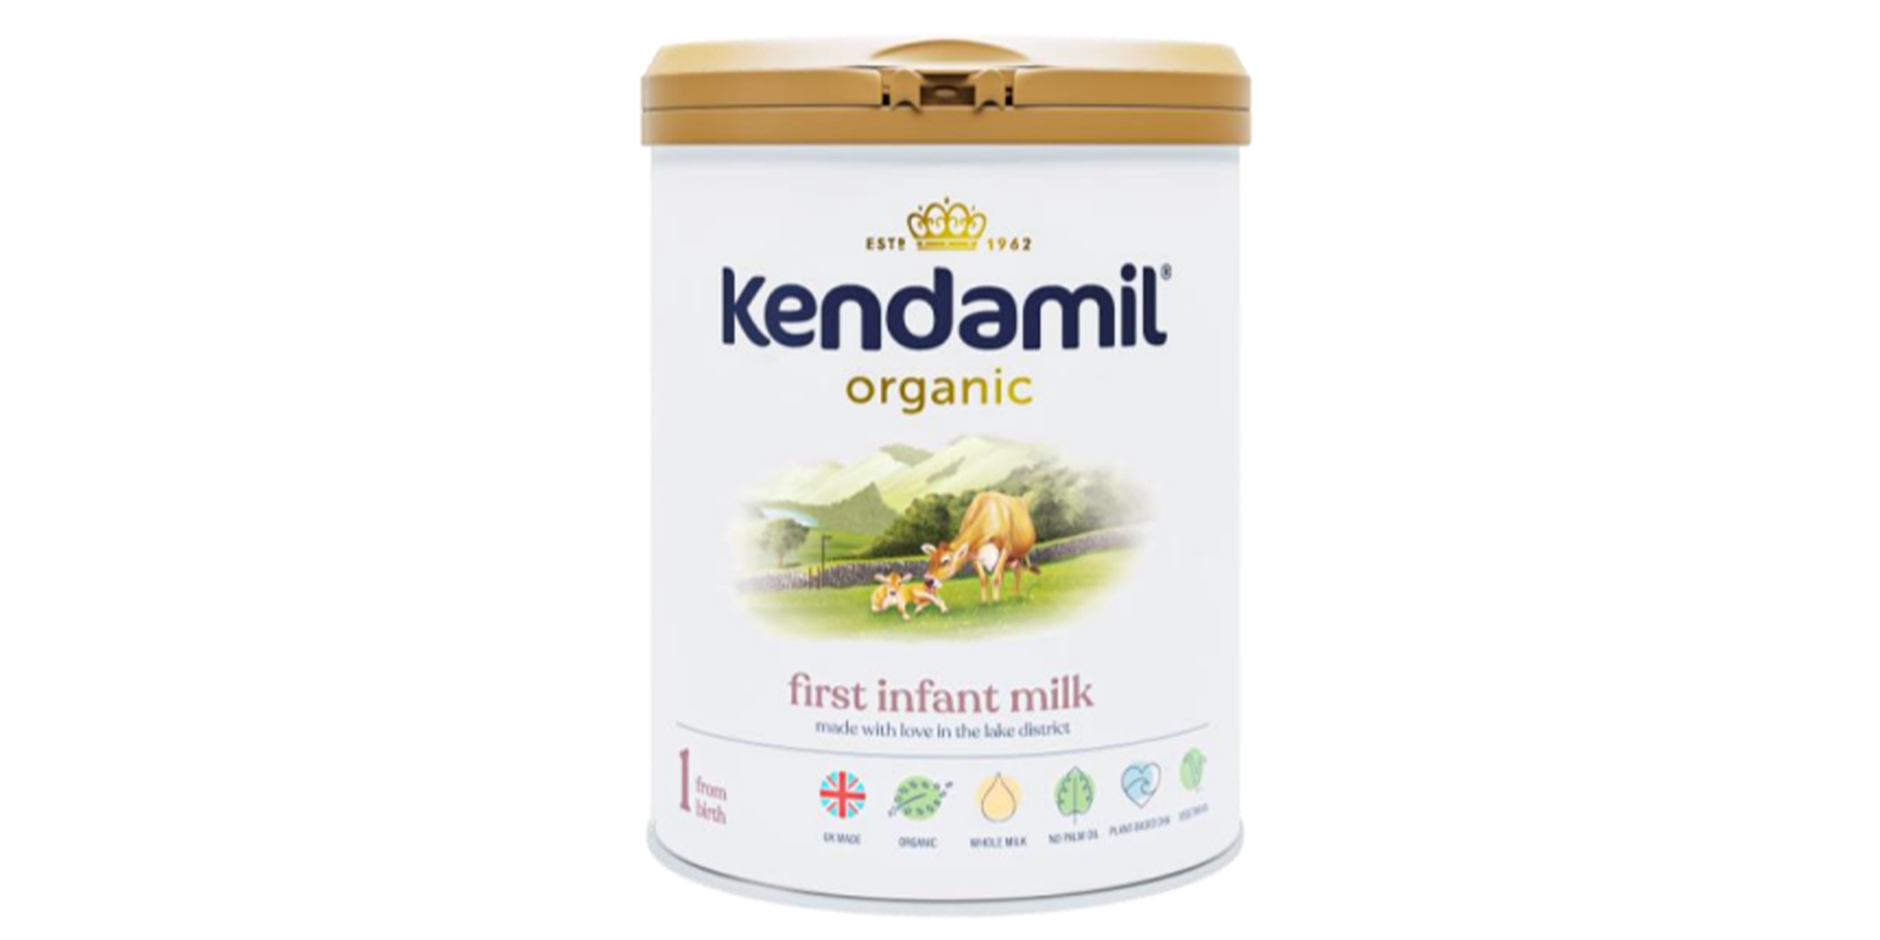 A can of Kendamil Organic formula